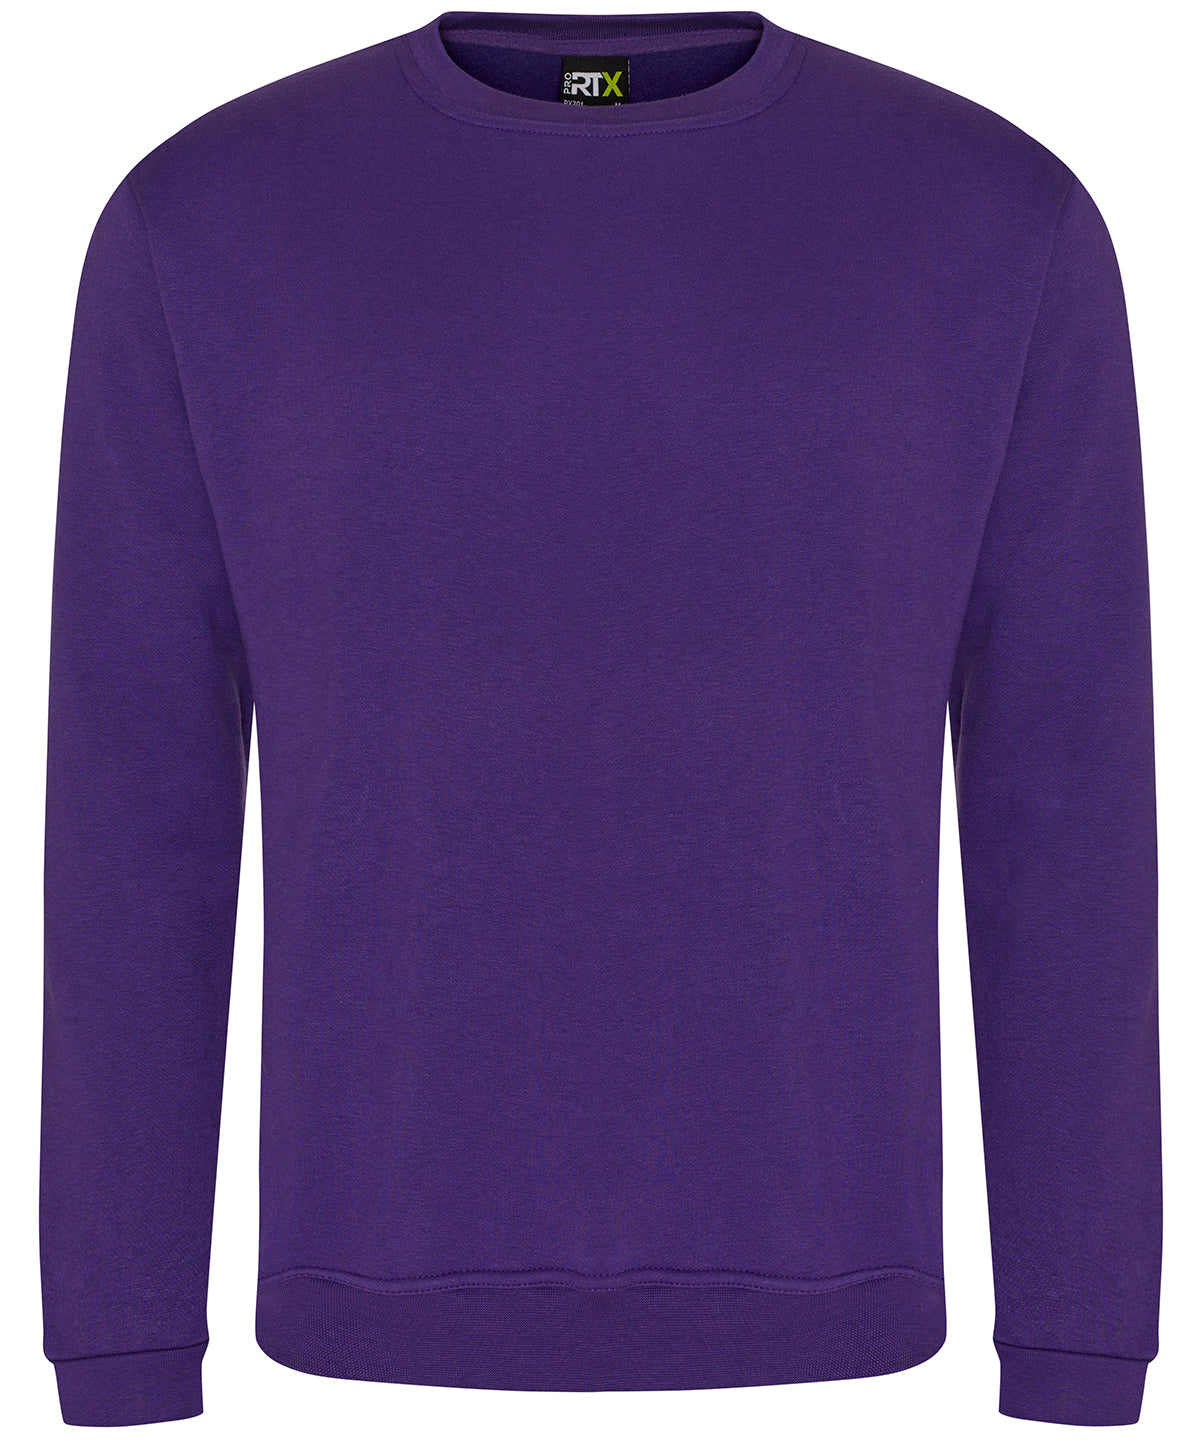 ProRTX Pro sweatshirt Purple